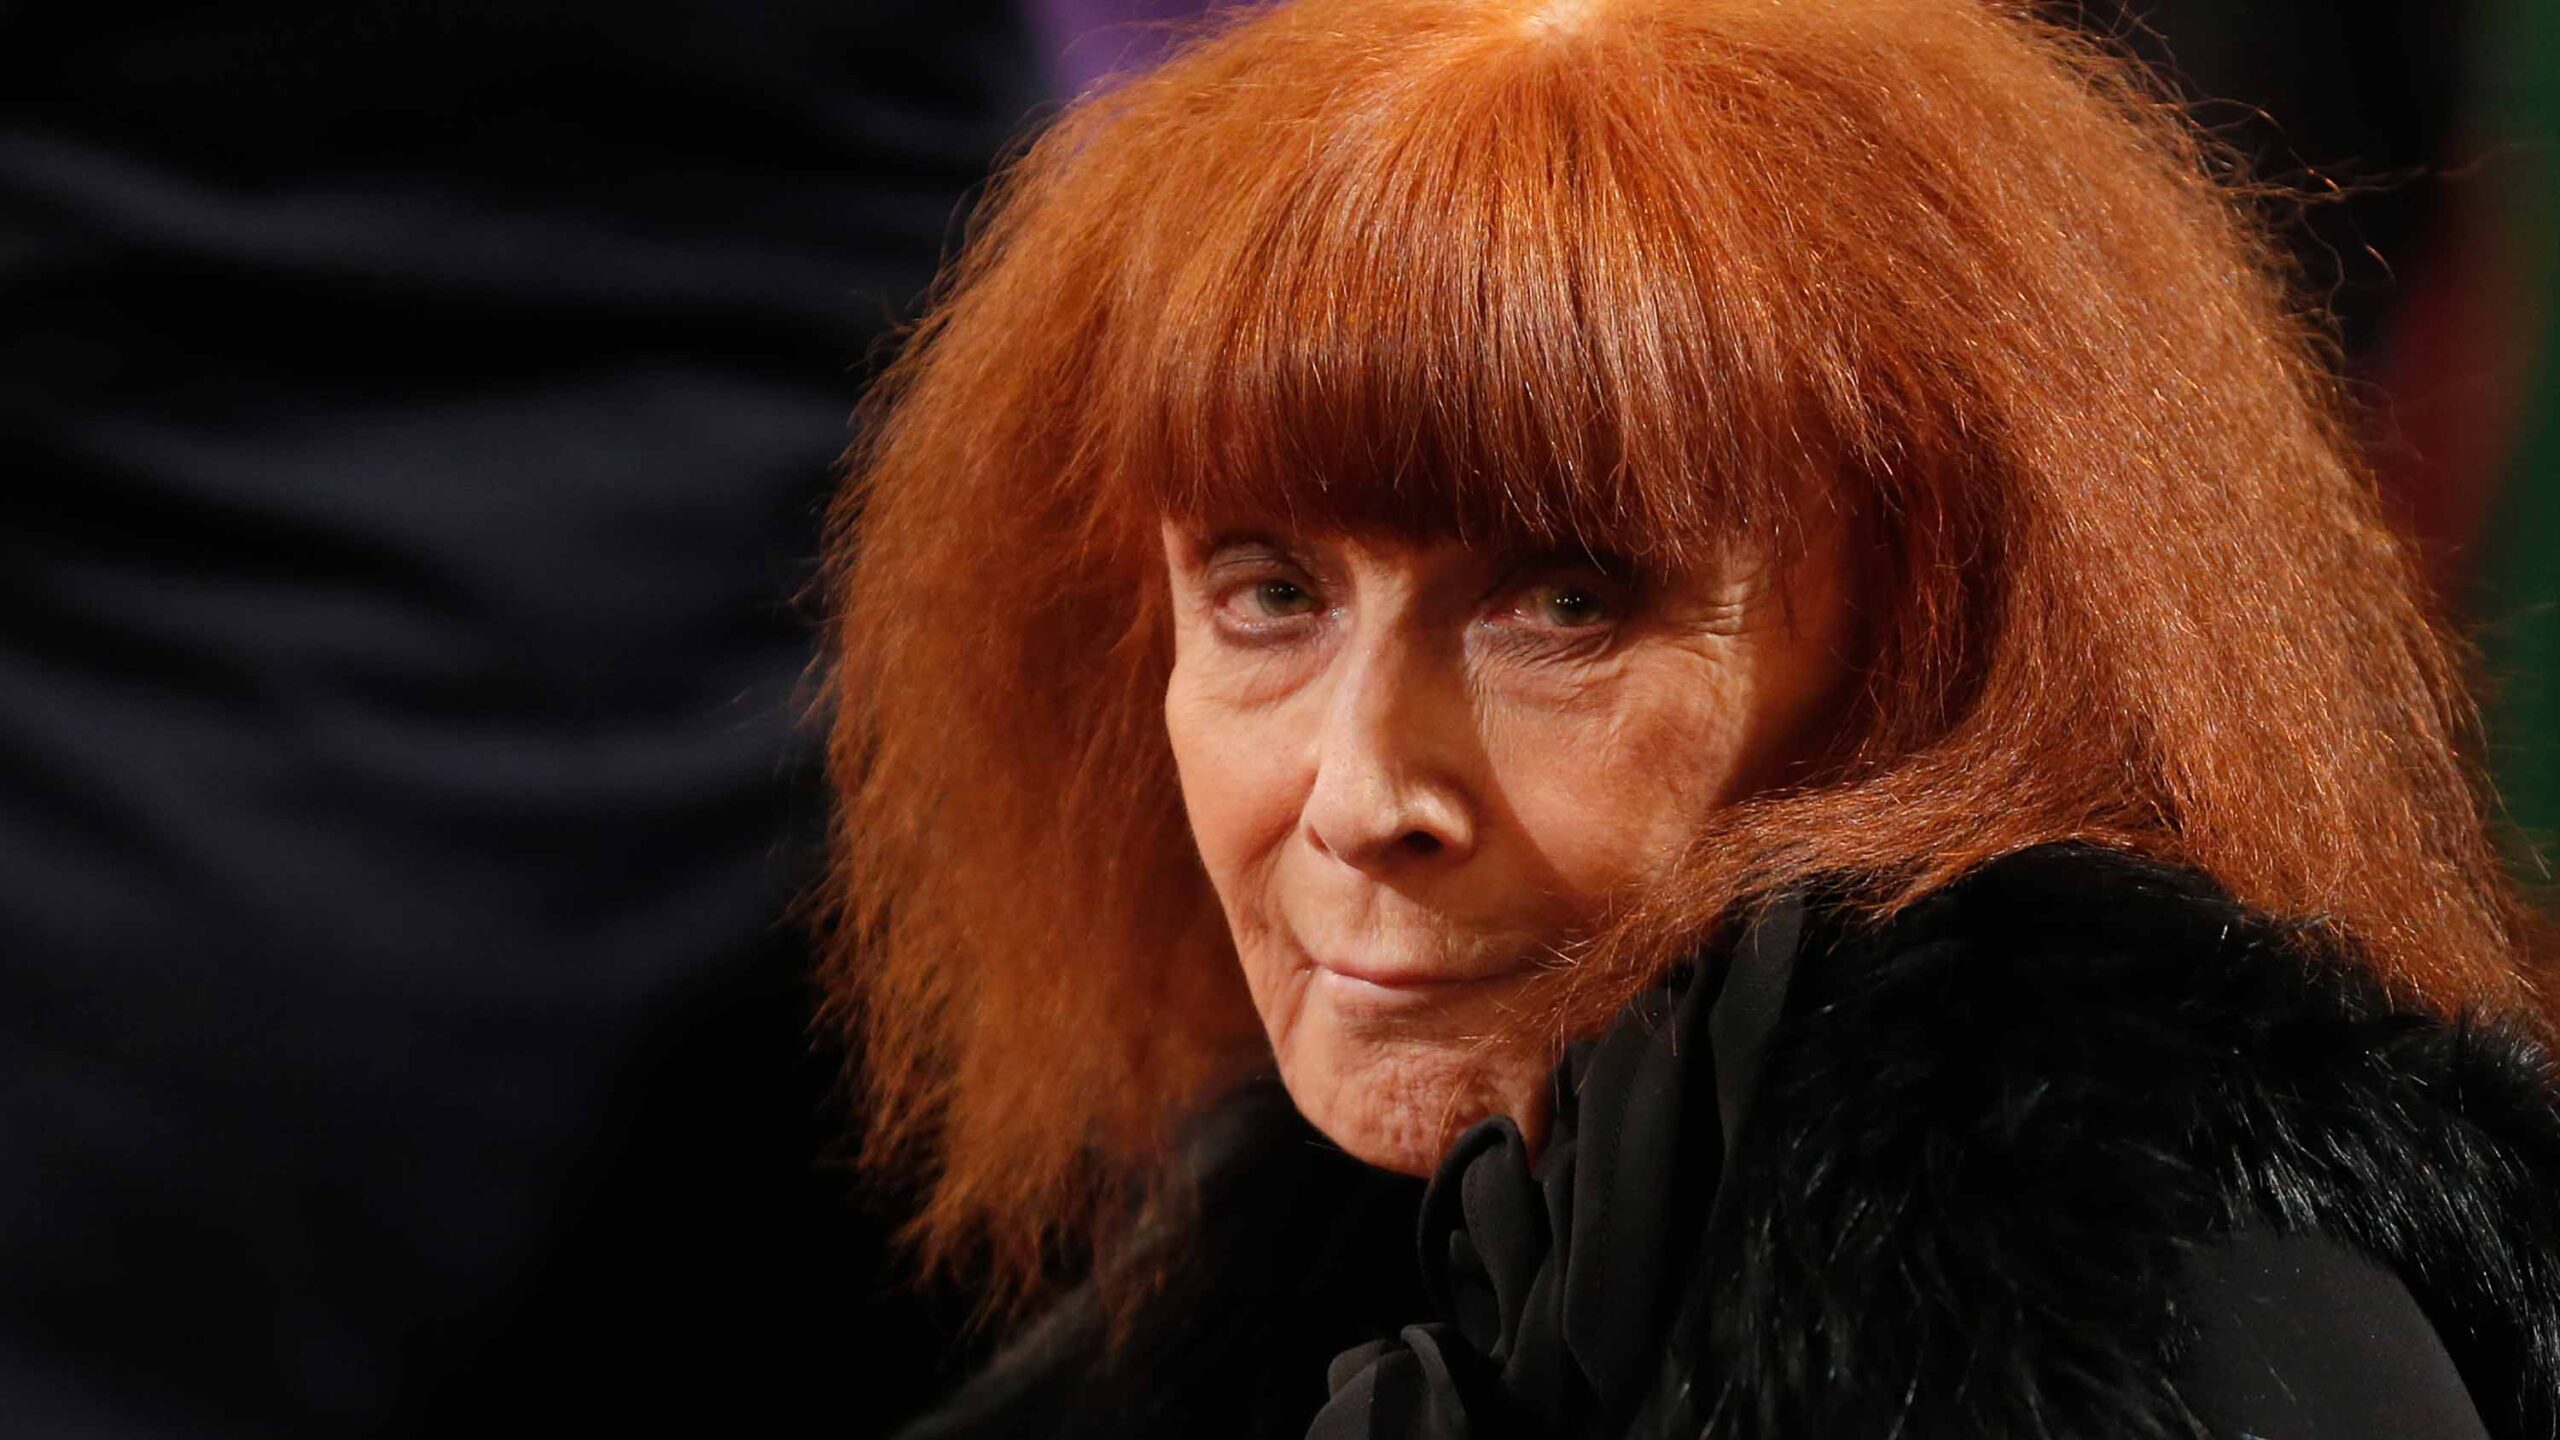 Sonia Rykiel, queen of post-60s Paris chic, dies at 86